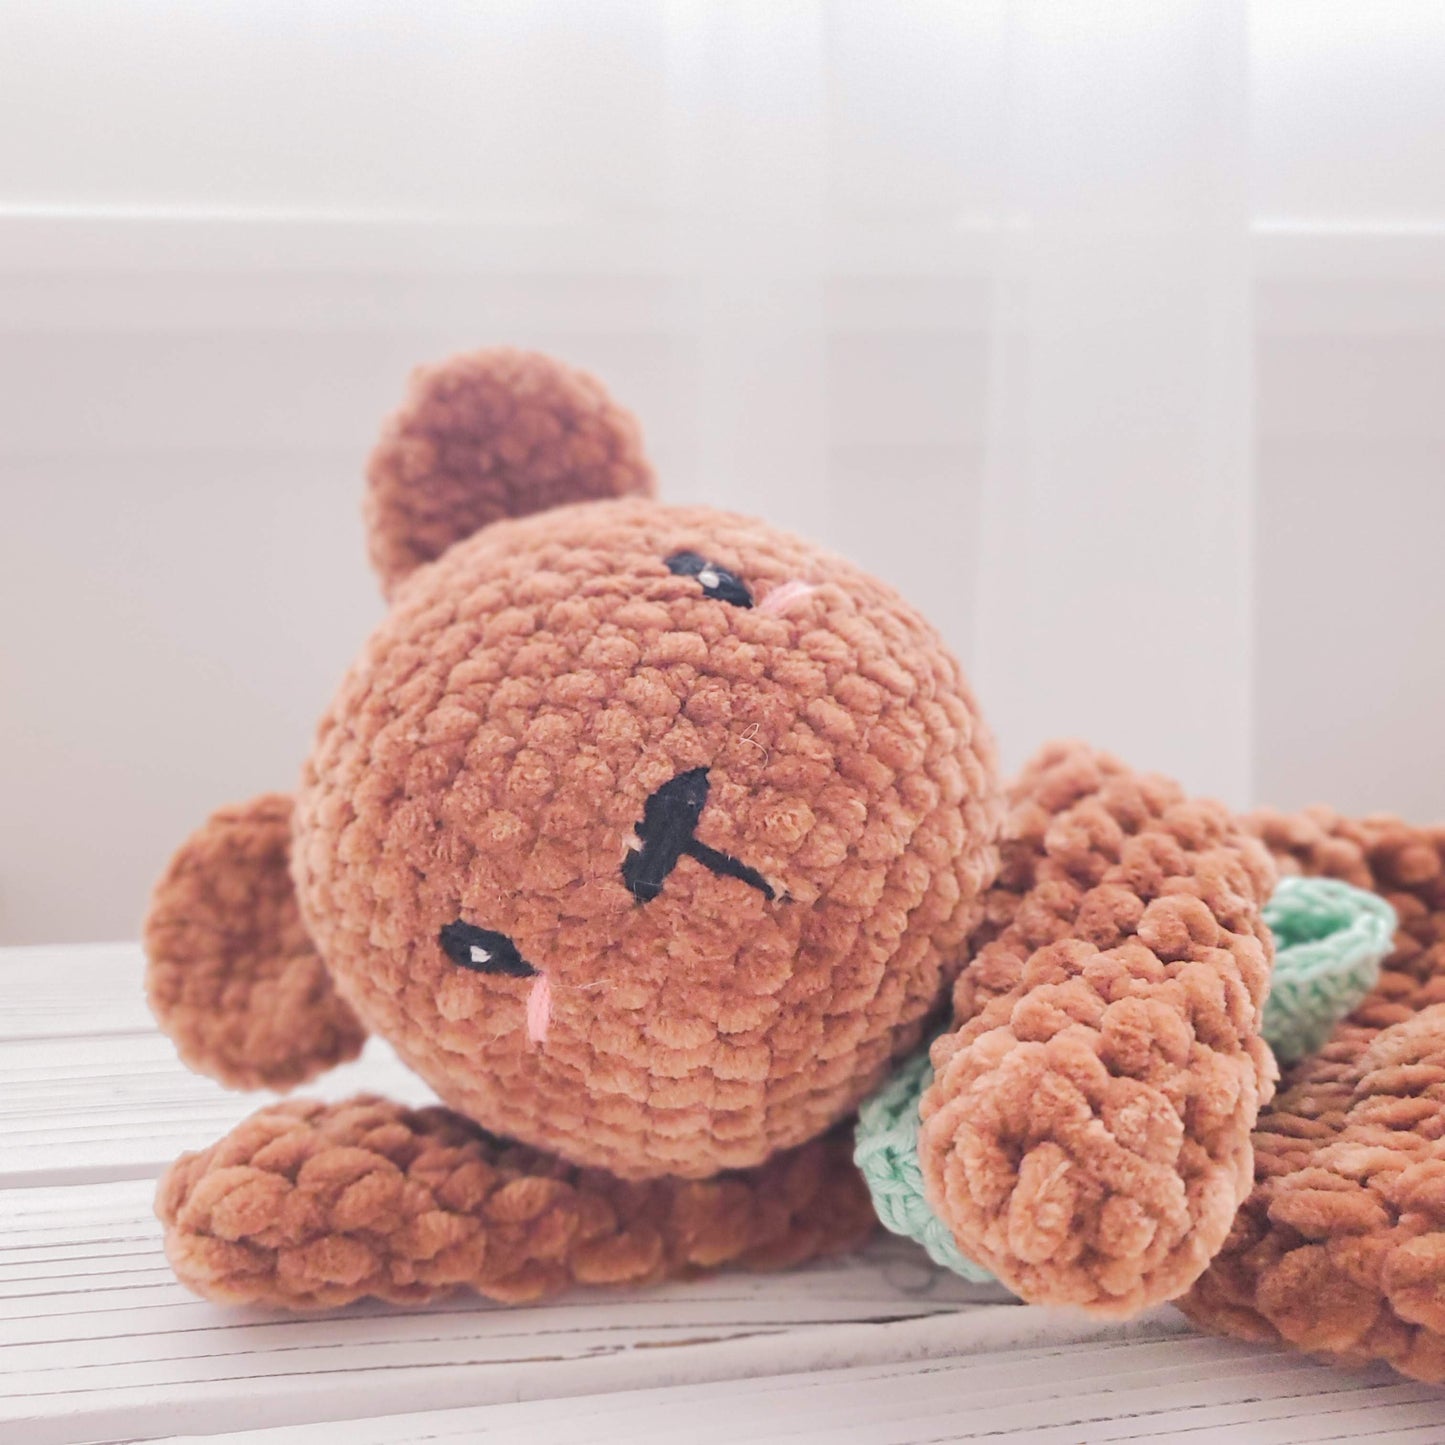 Handmade Bear and Bunny Lovey / Crochet Doll